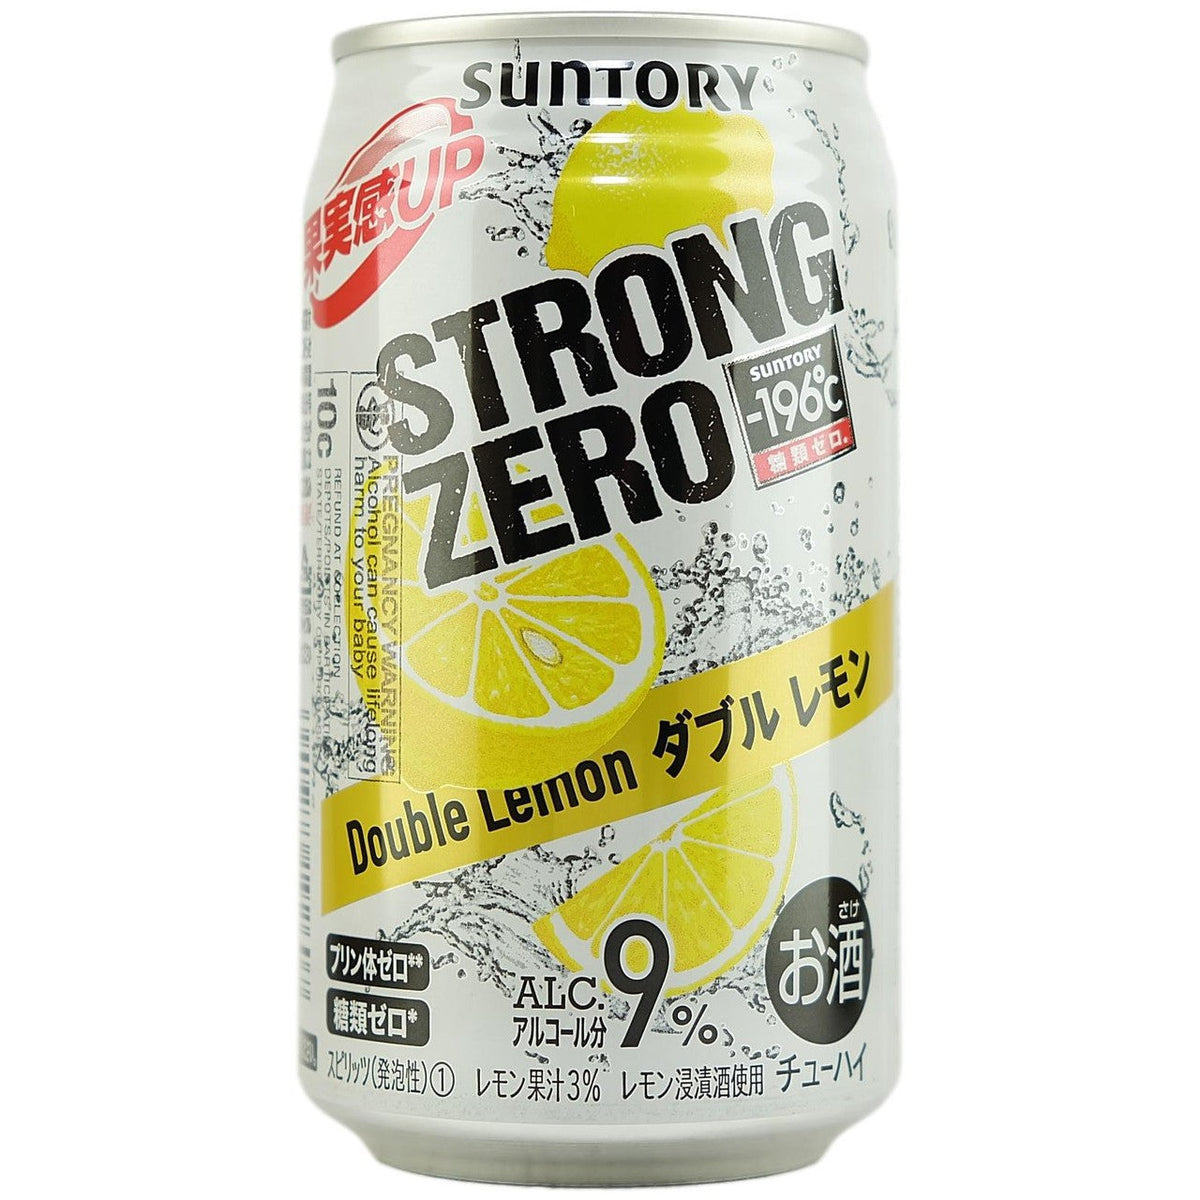 Suntory Strong 9% Zero -196 Double Lemon (24x350ml)